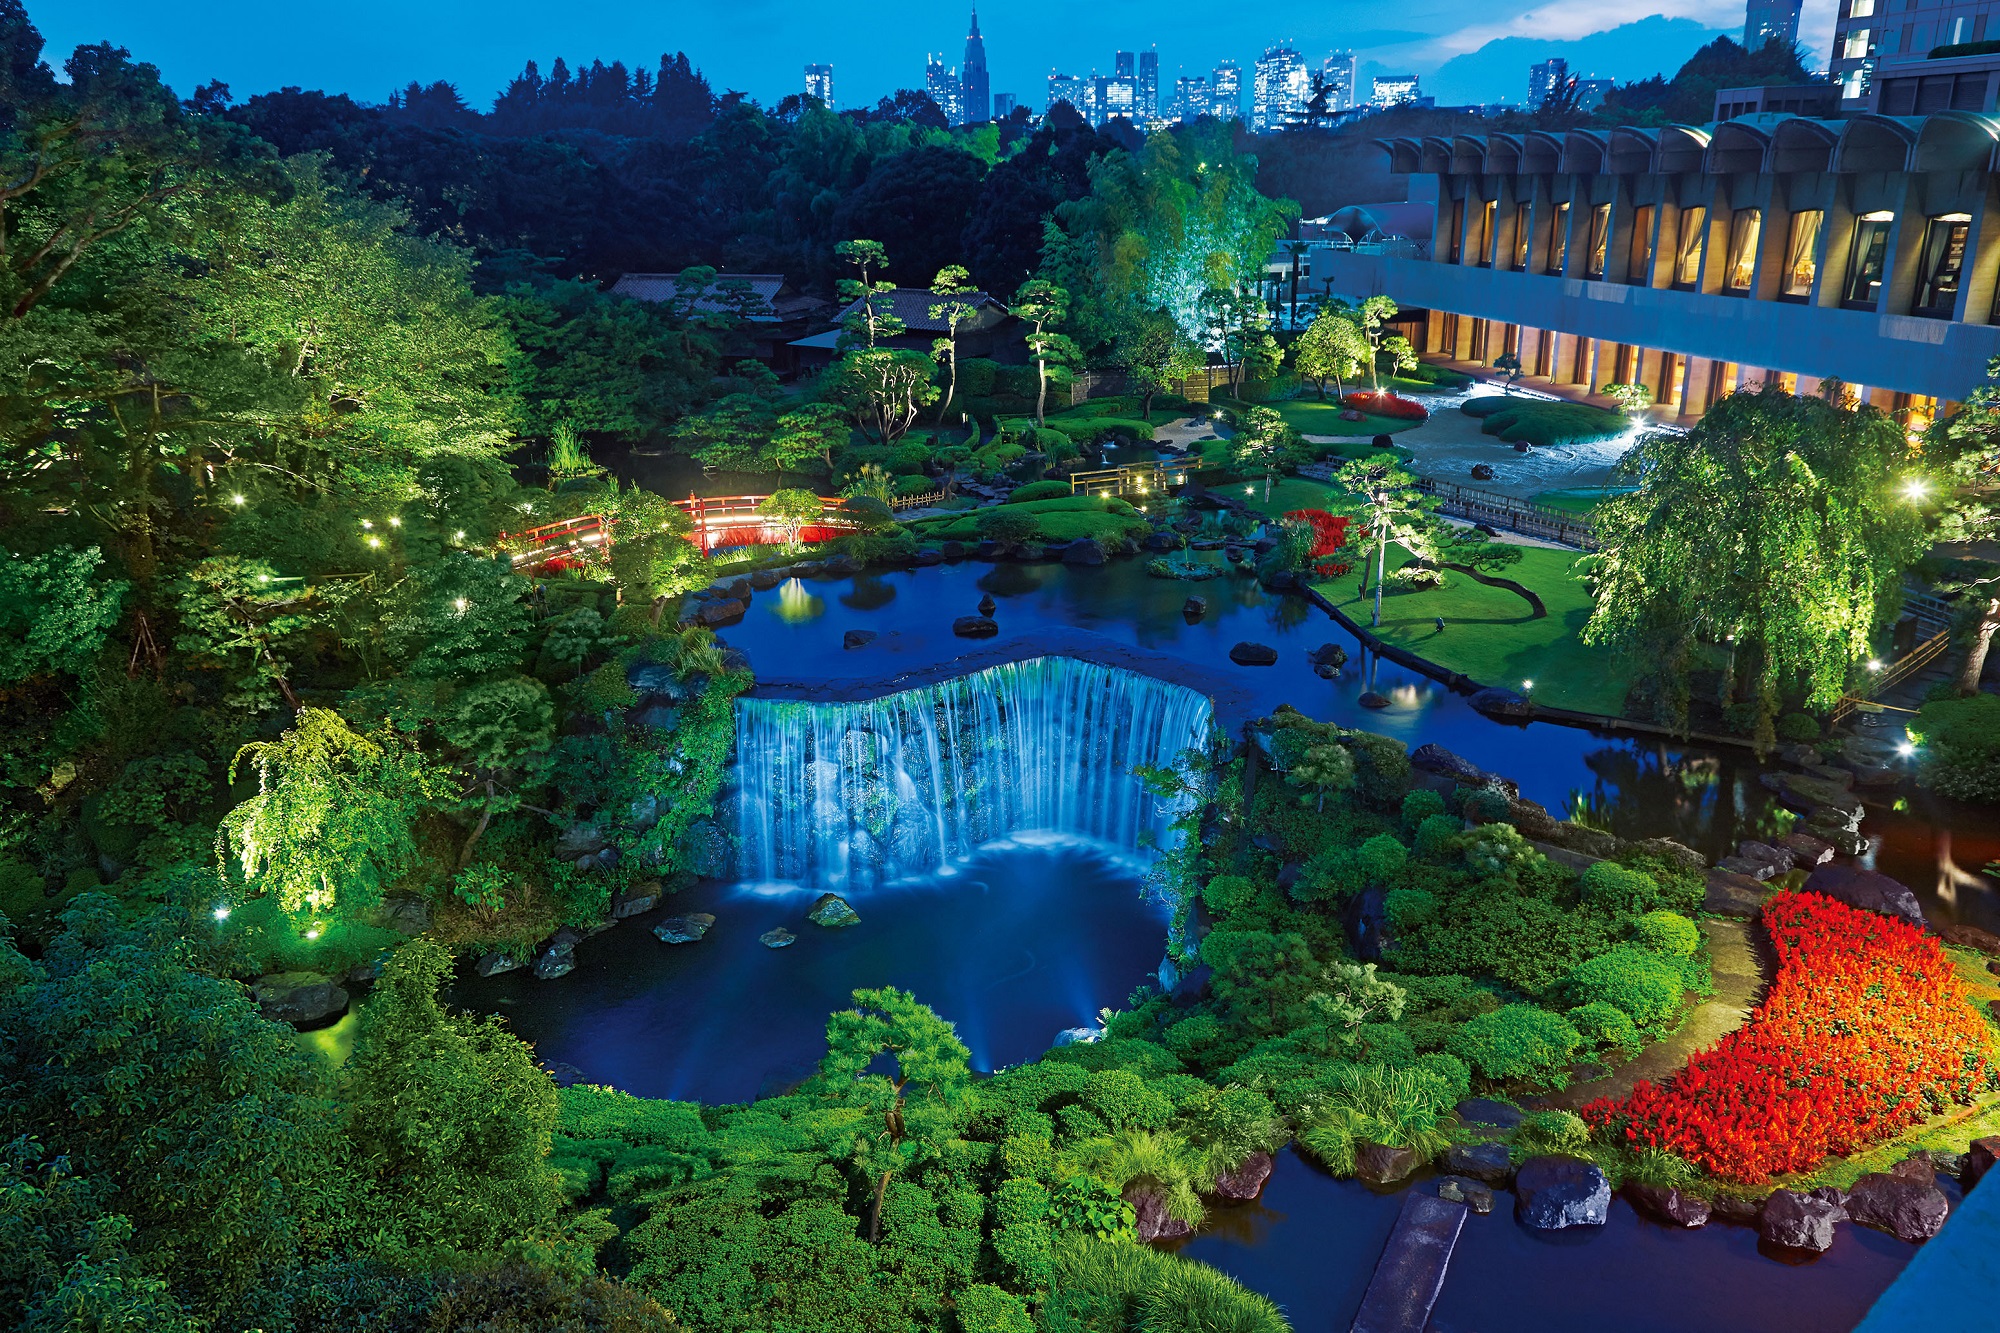 Hotel New Otani Tokyo, "EXECUTIVE HOUSE ZEN" Japanese Garden at Night